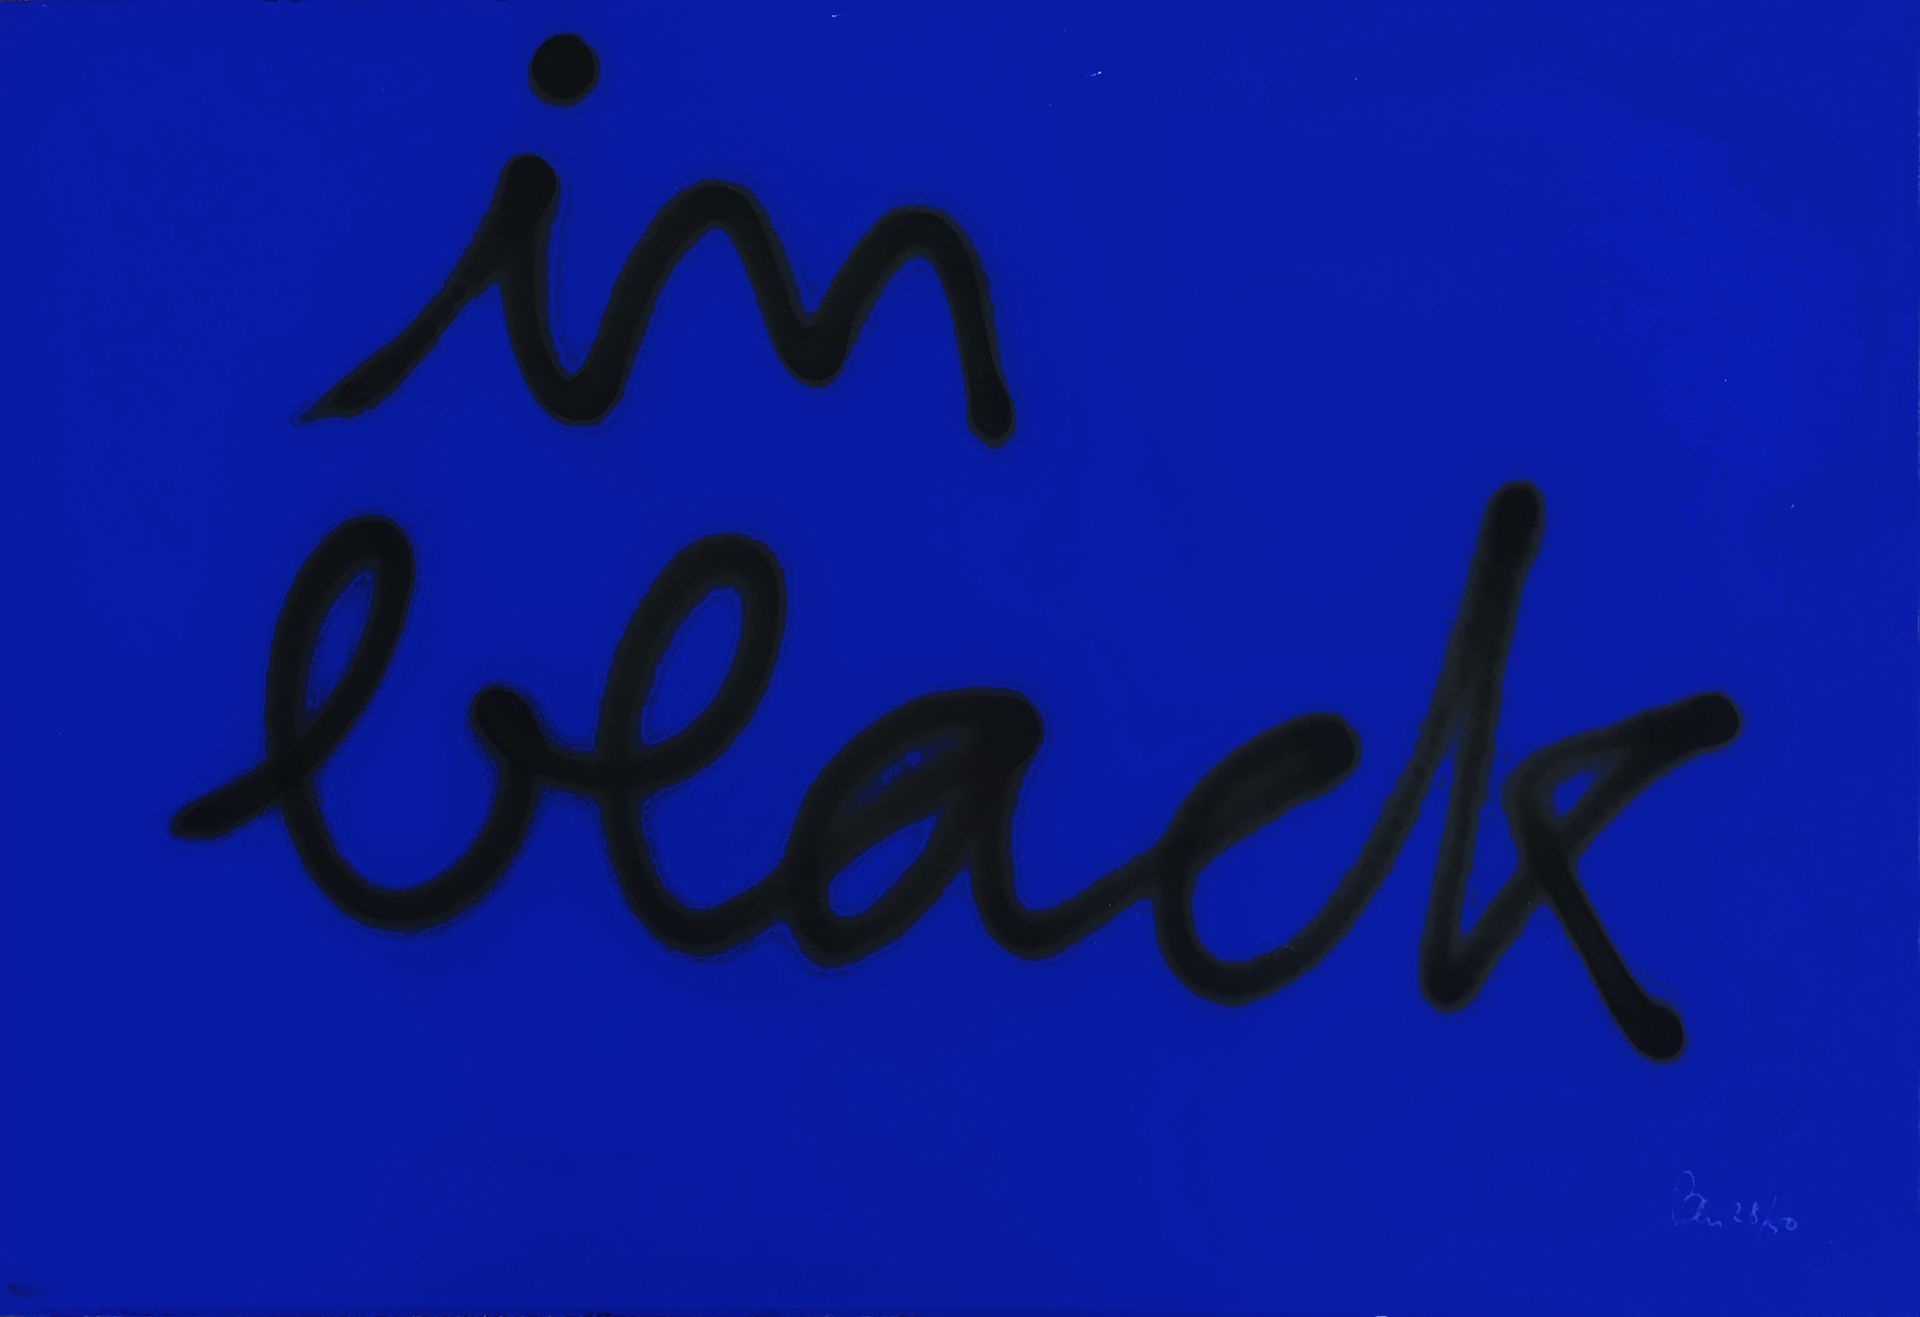 BEN VAUTIER (ne en 1935) 黑色，1976年
纸上丙烯喷雾
铅笔签名并编号28/50
1976年在瑞典制作的手工版
47 x 70 cm
&hellip;